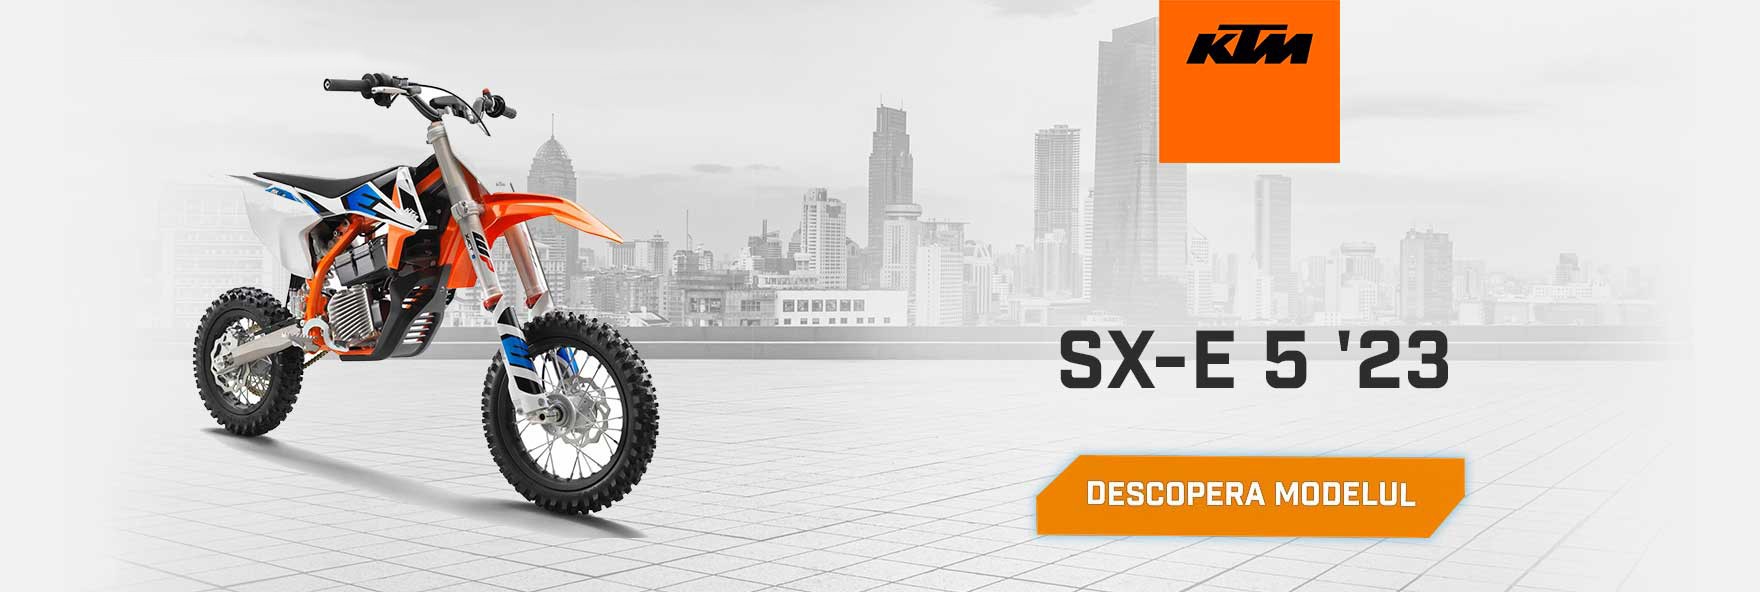 KTM SX-E 5 '23